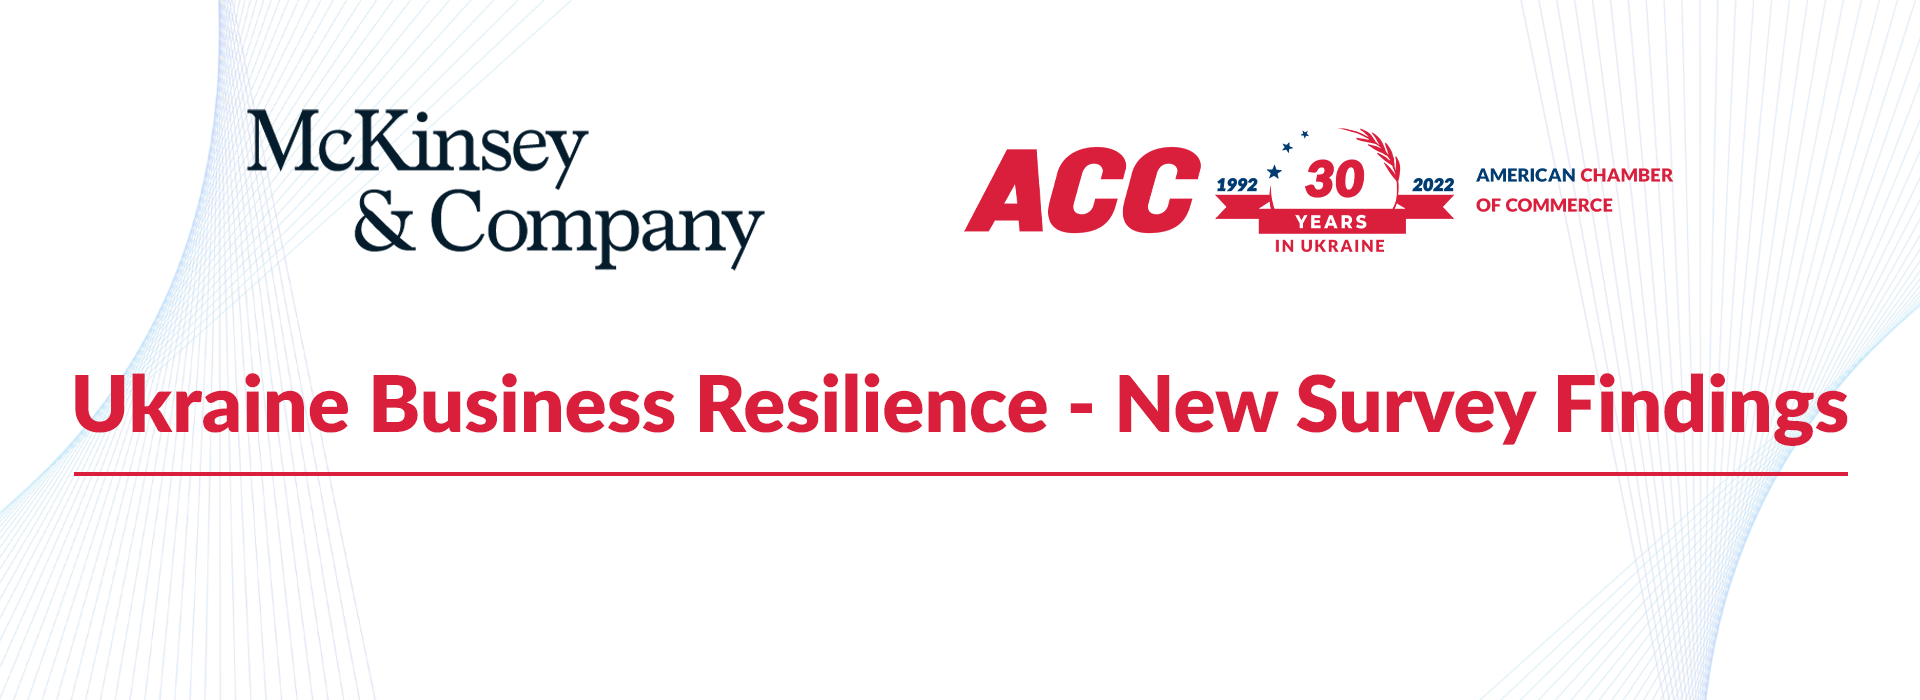 AmCham/McKinsey Ukraine Business Resilience Survey Findings